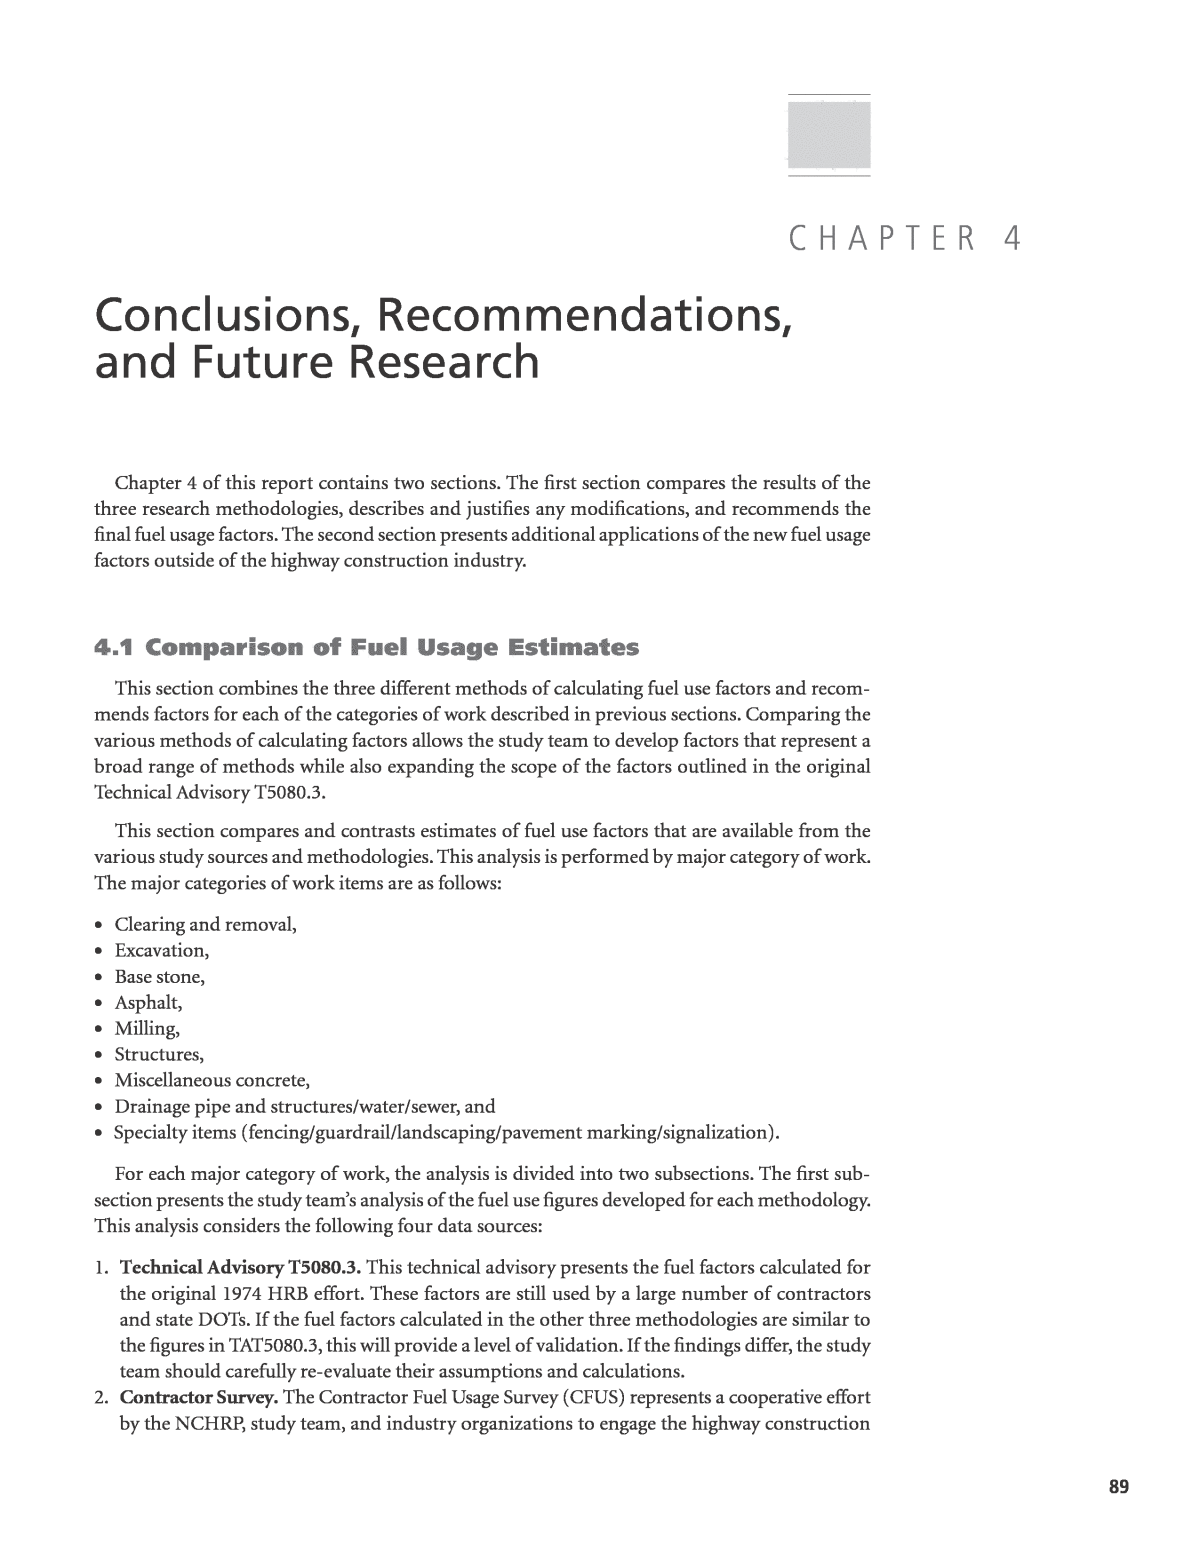 Dissertation recommendations